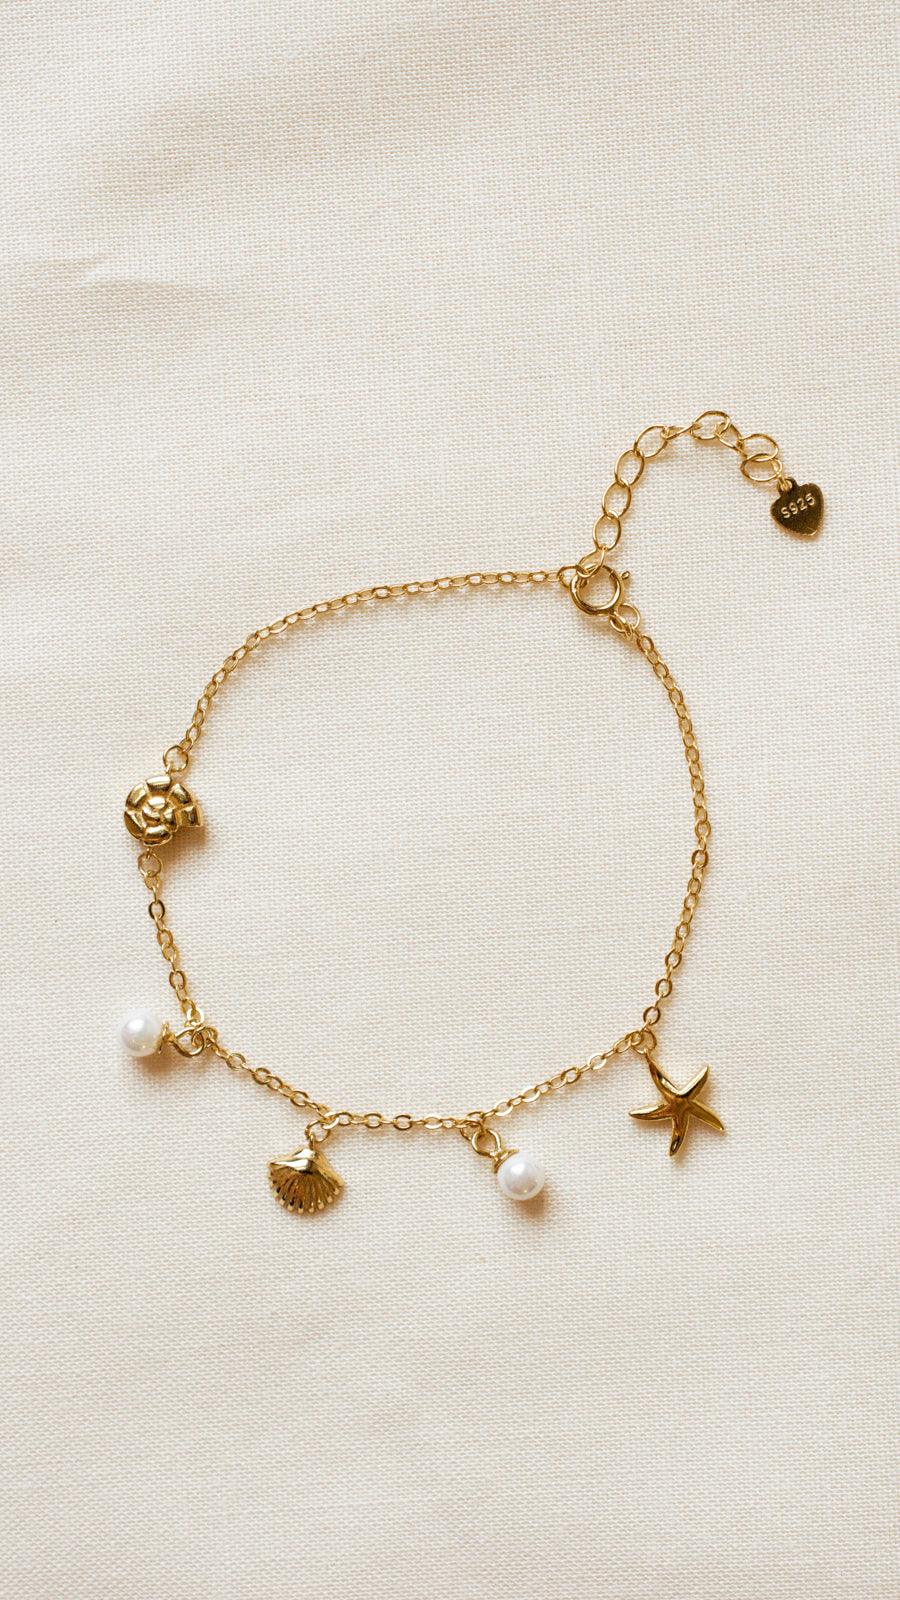 ocean charm bracelet display dainty shells, starfish and pearl charm